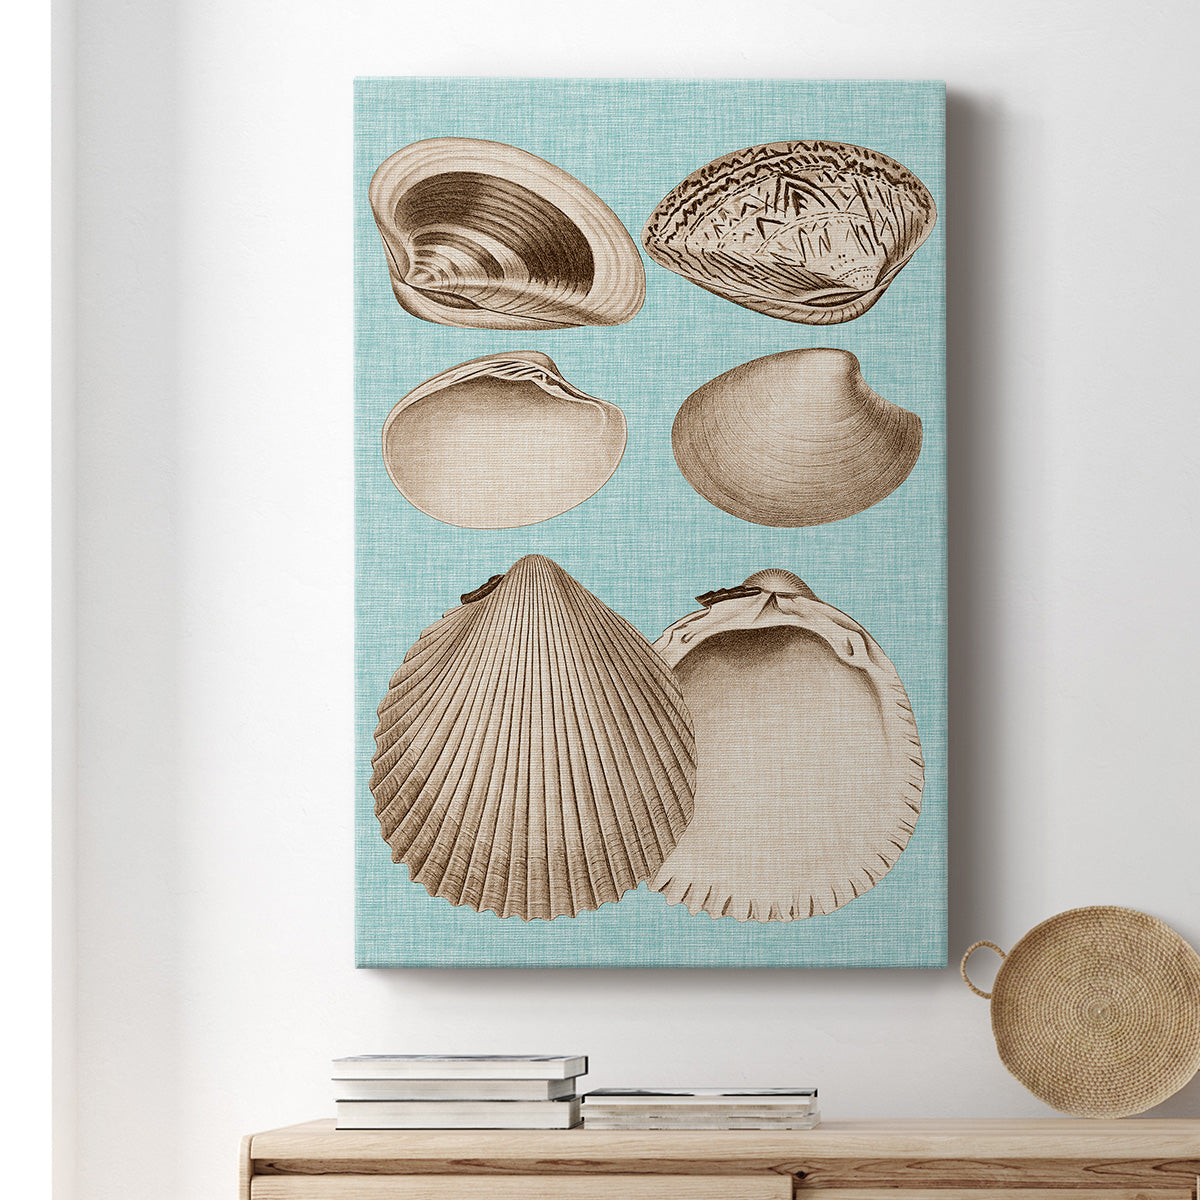 Sepia & Aqua Shells IX Premium Gallery Wrapped Canvas - Ready to Hang